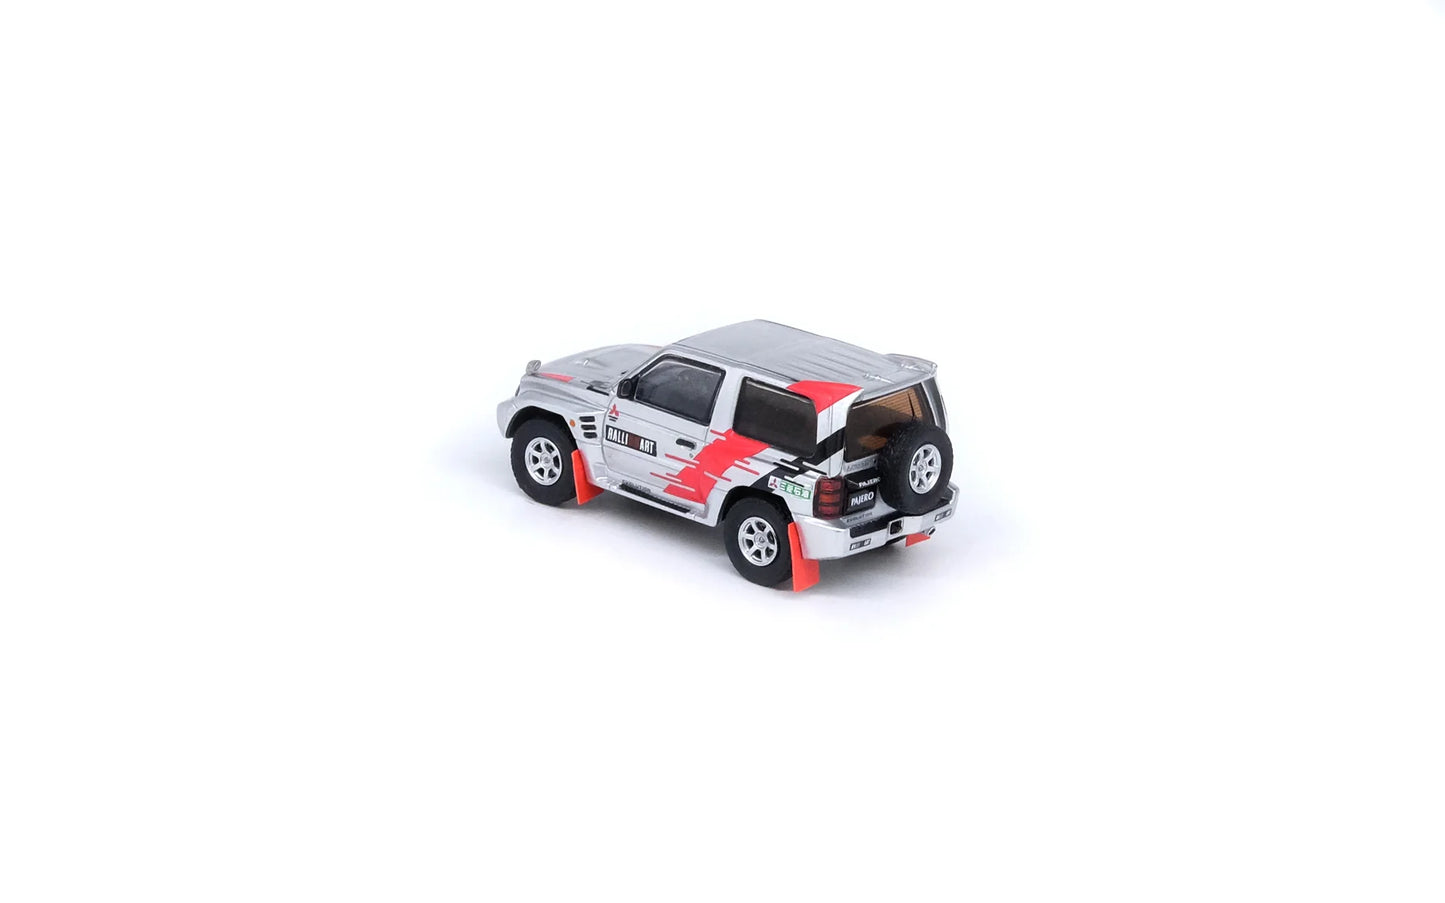 Inno64 Mitsubishi Pajero Evolution Rally Art Silver 1:64